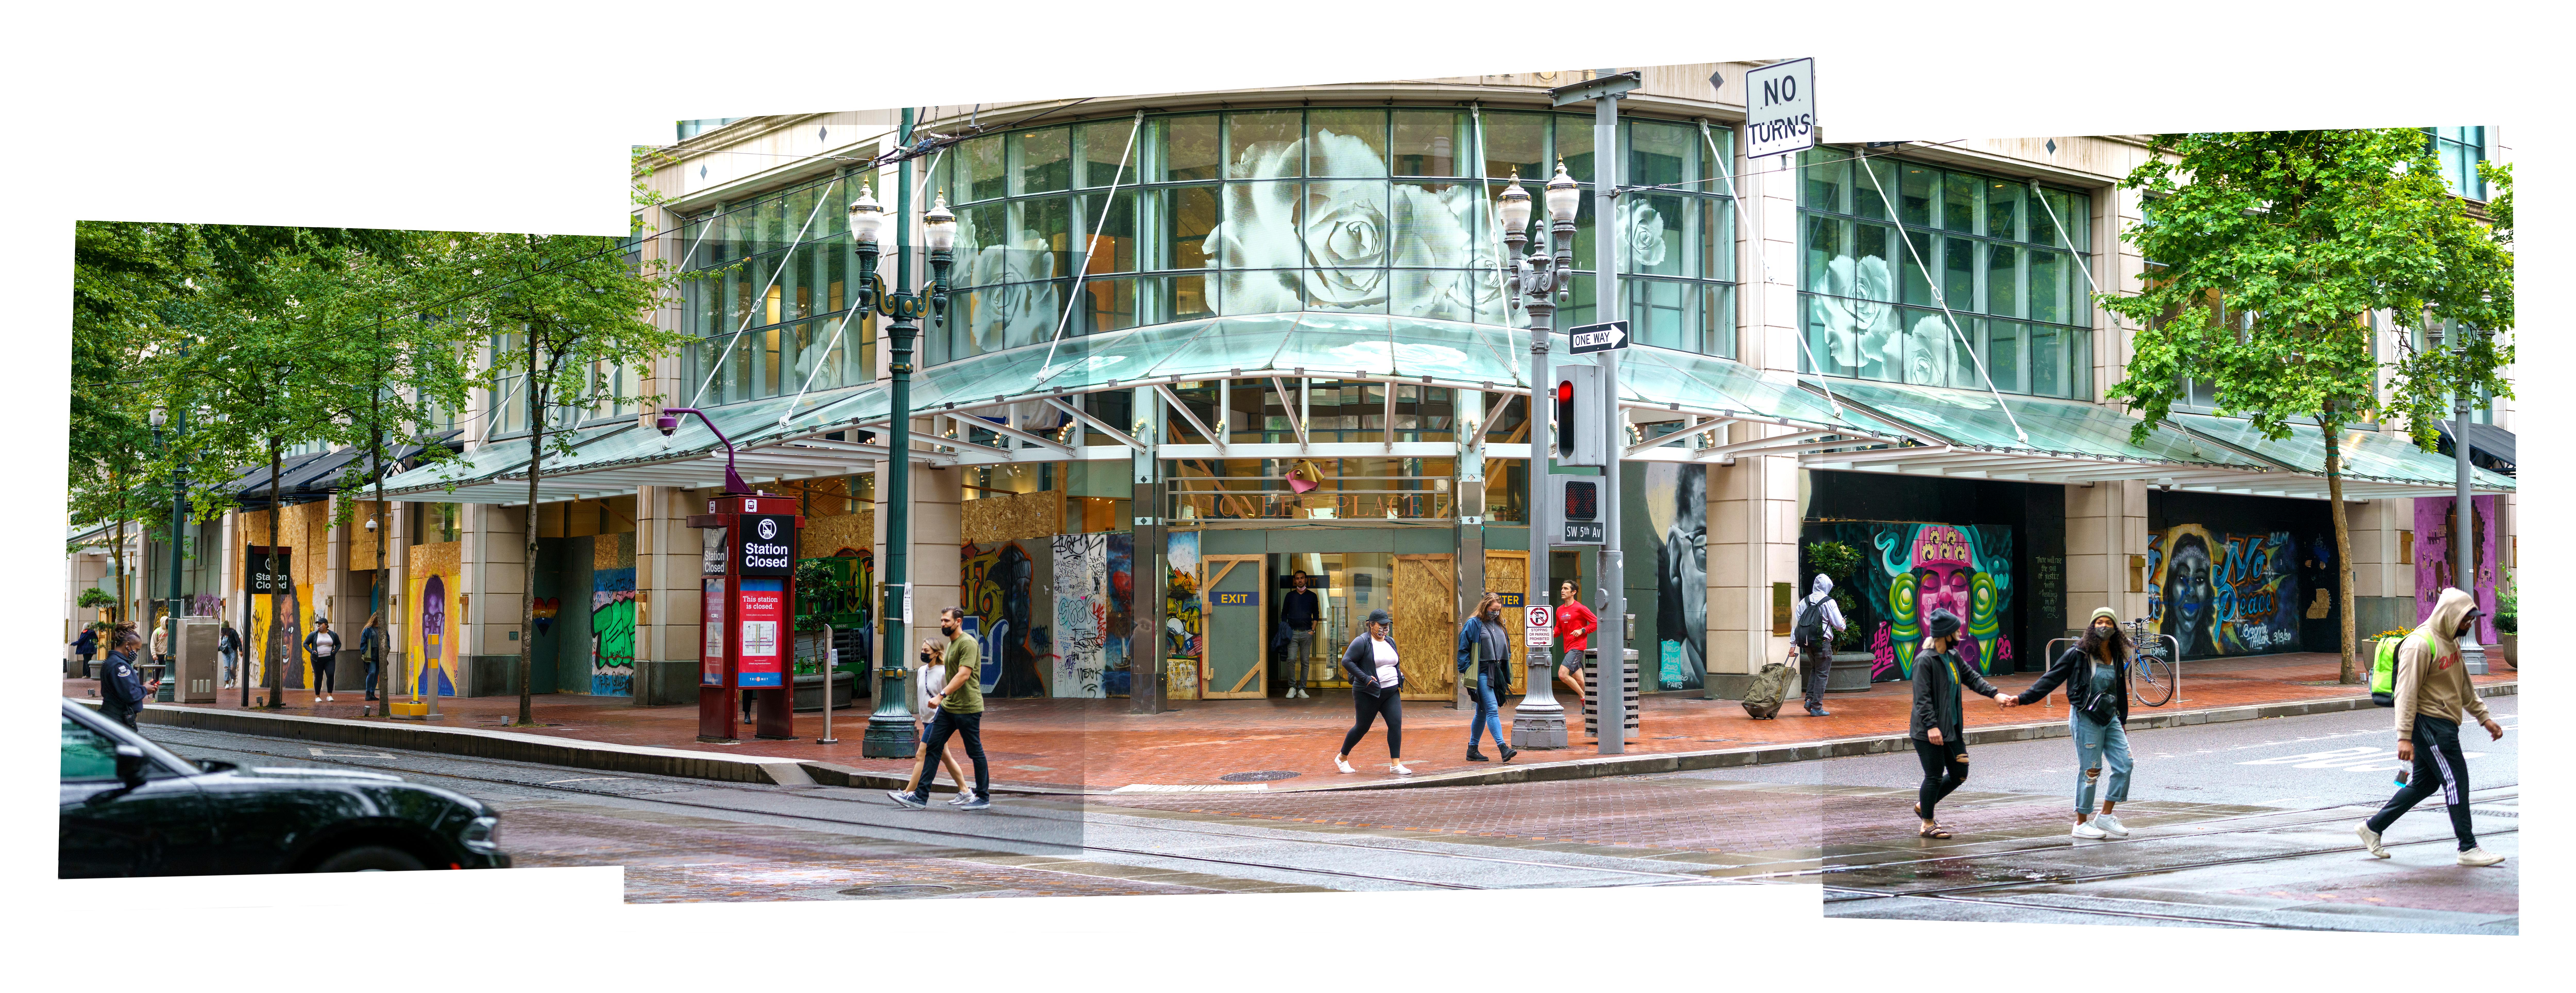 Portland storefronts boarding up amid coronavirus pandemic 